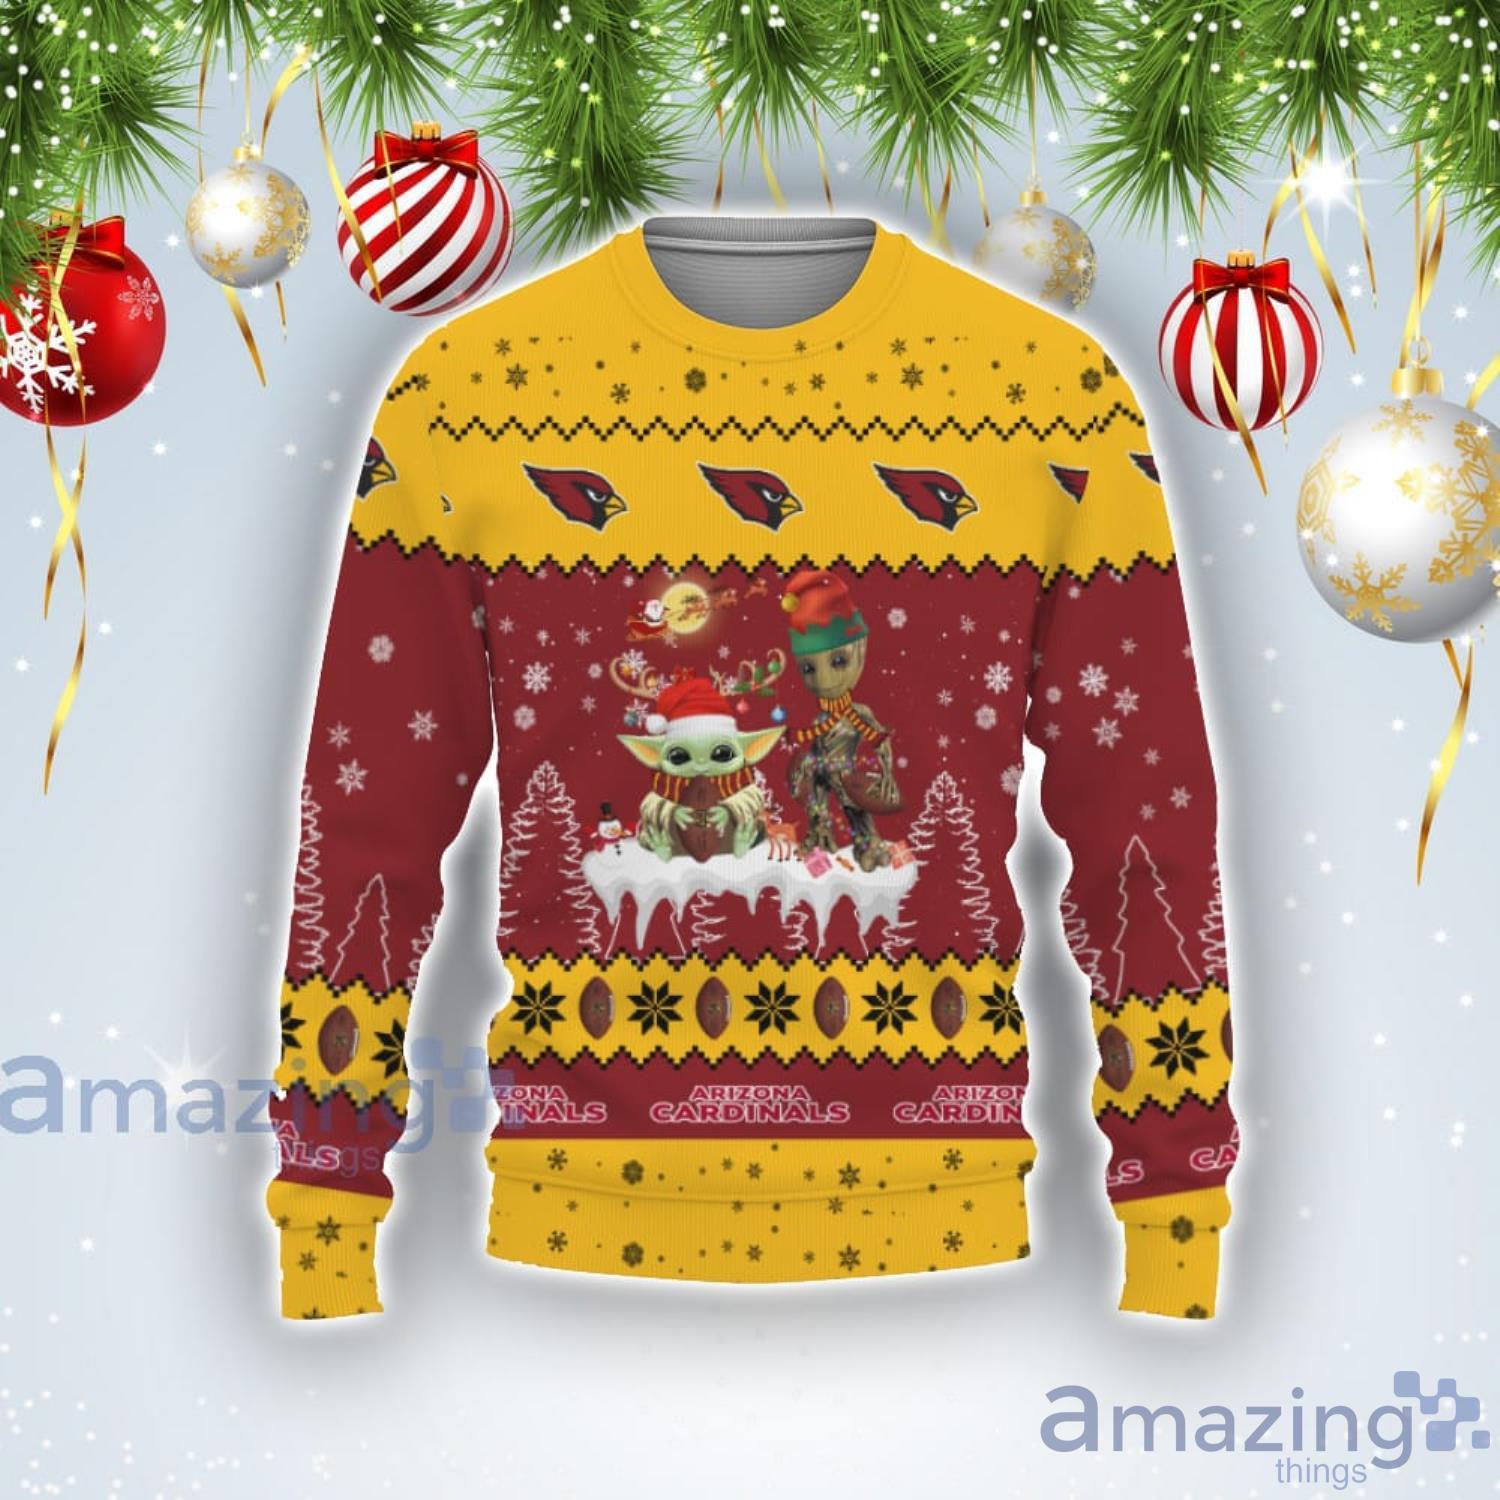 Tis The Season Christmas 2022 Baby Yoda Groot Cute Gift Arizona Cardinals Ugly Christmas Sweater Product Photo 1